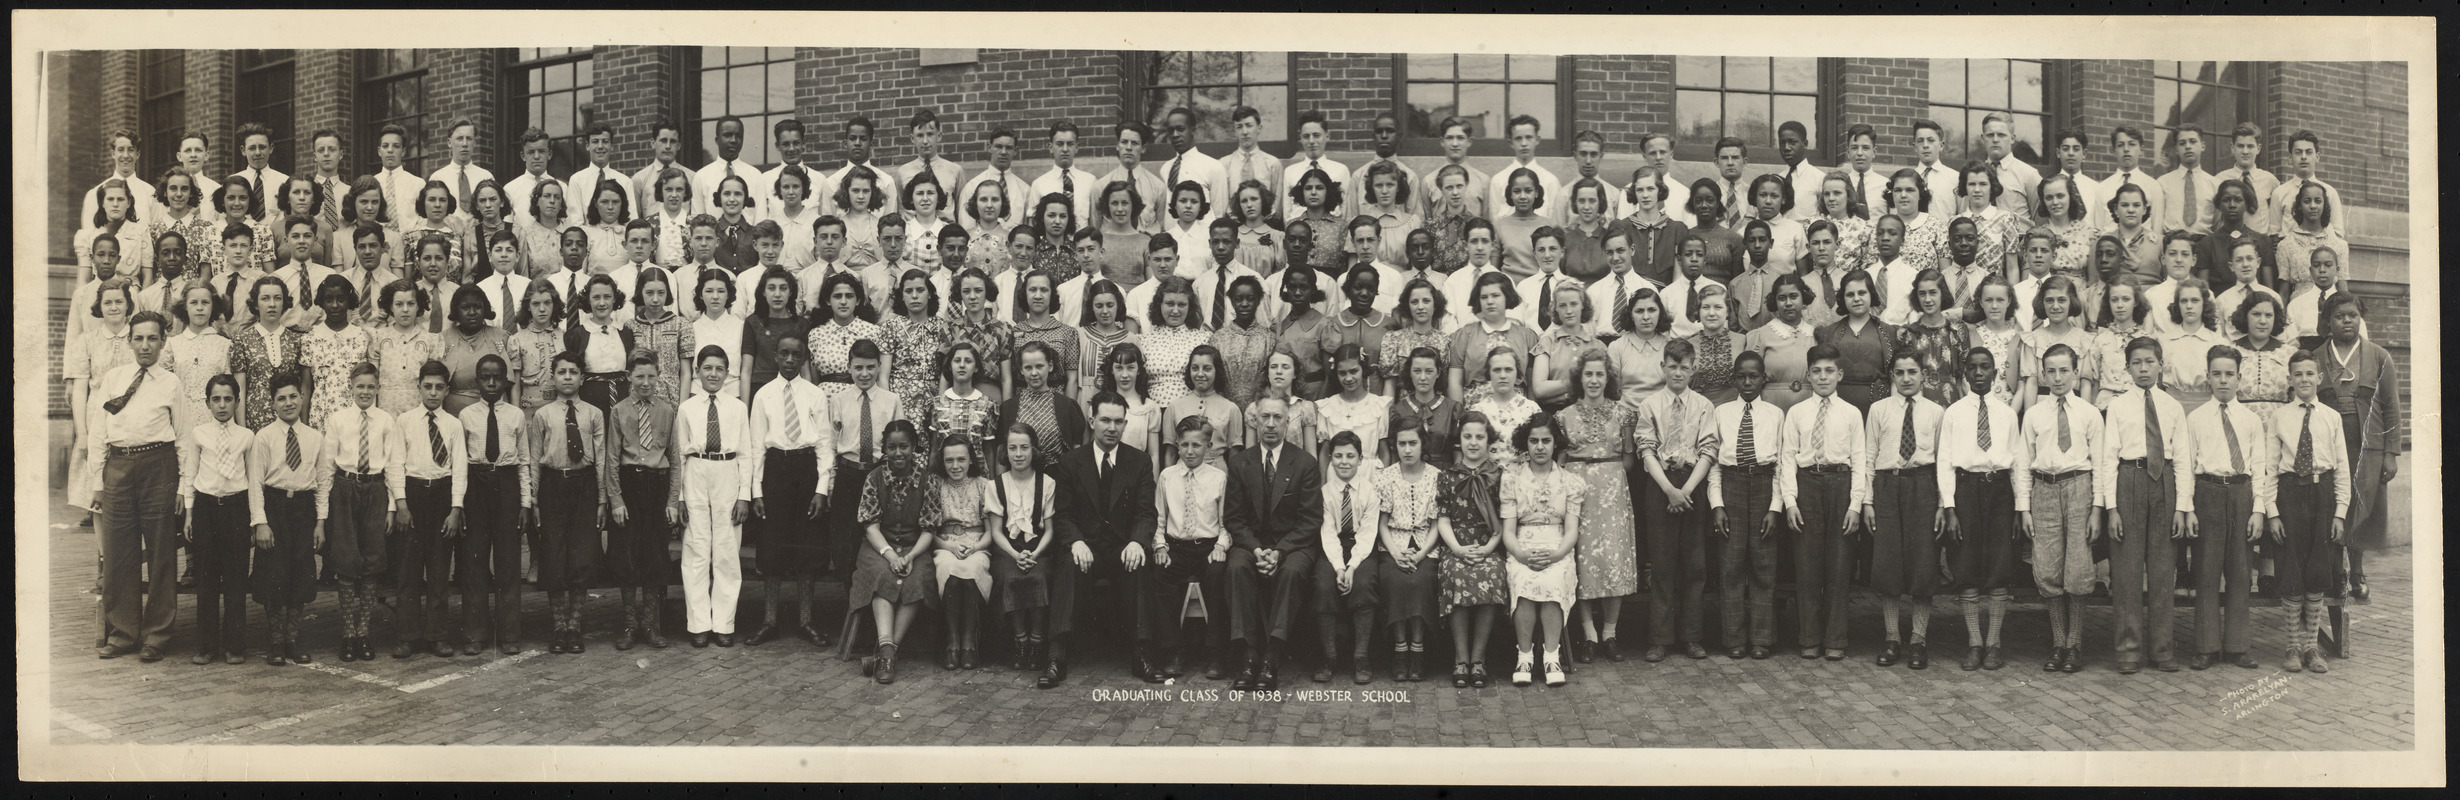 Graduating class of 1938 - Webster School